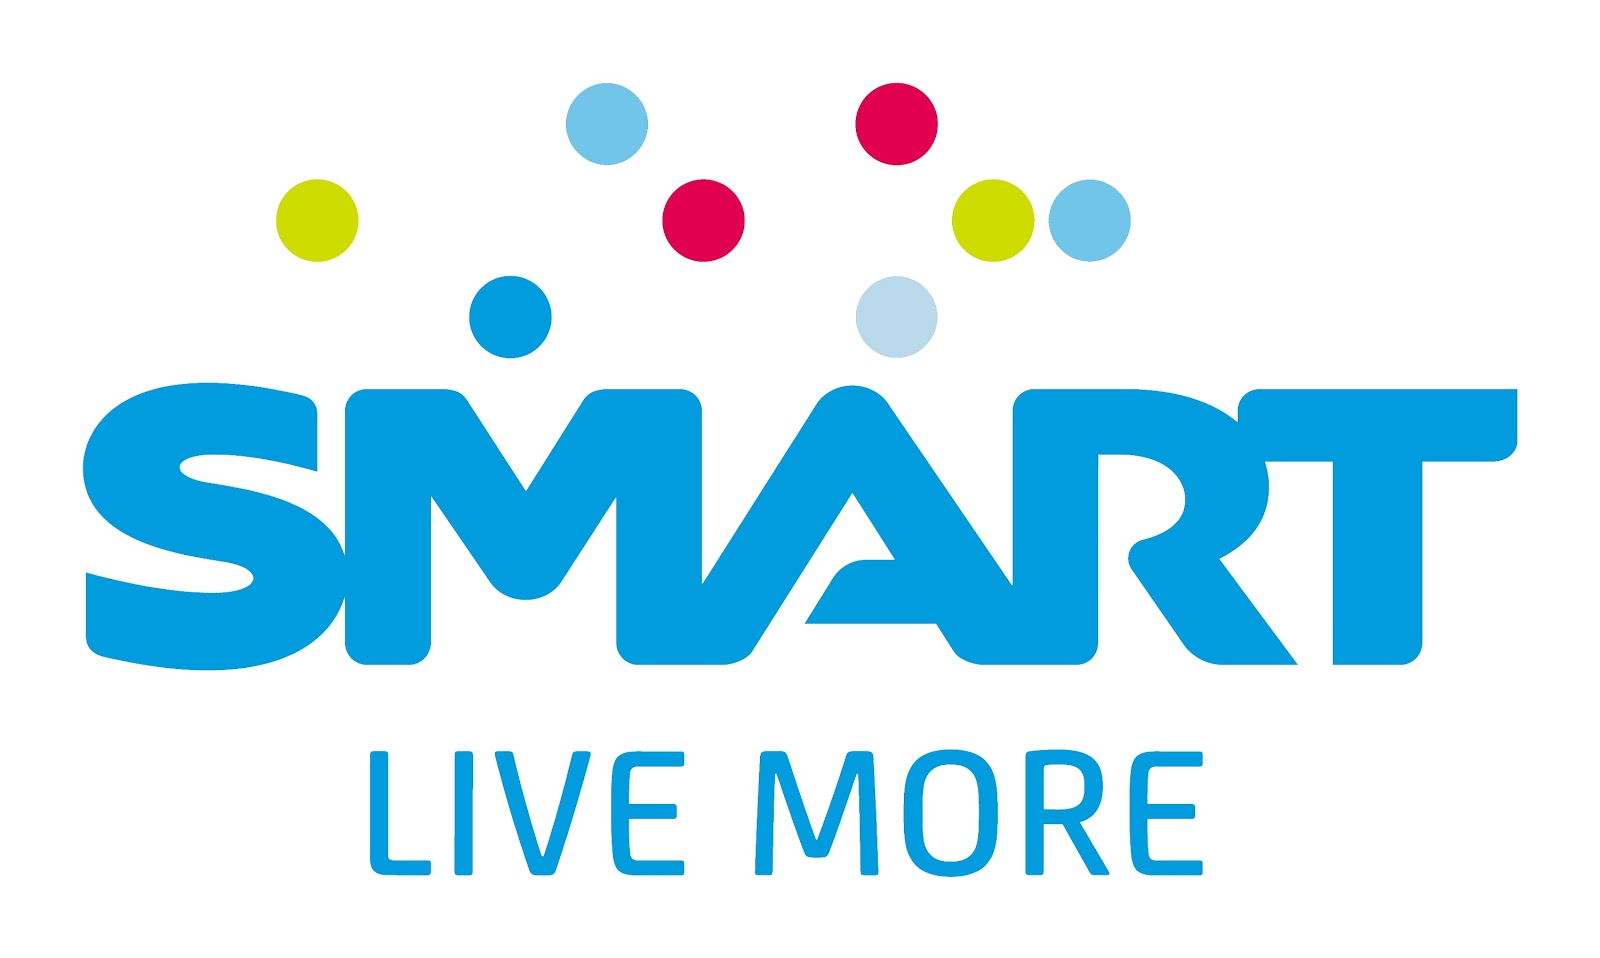 smart load logo